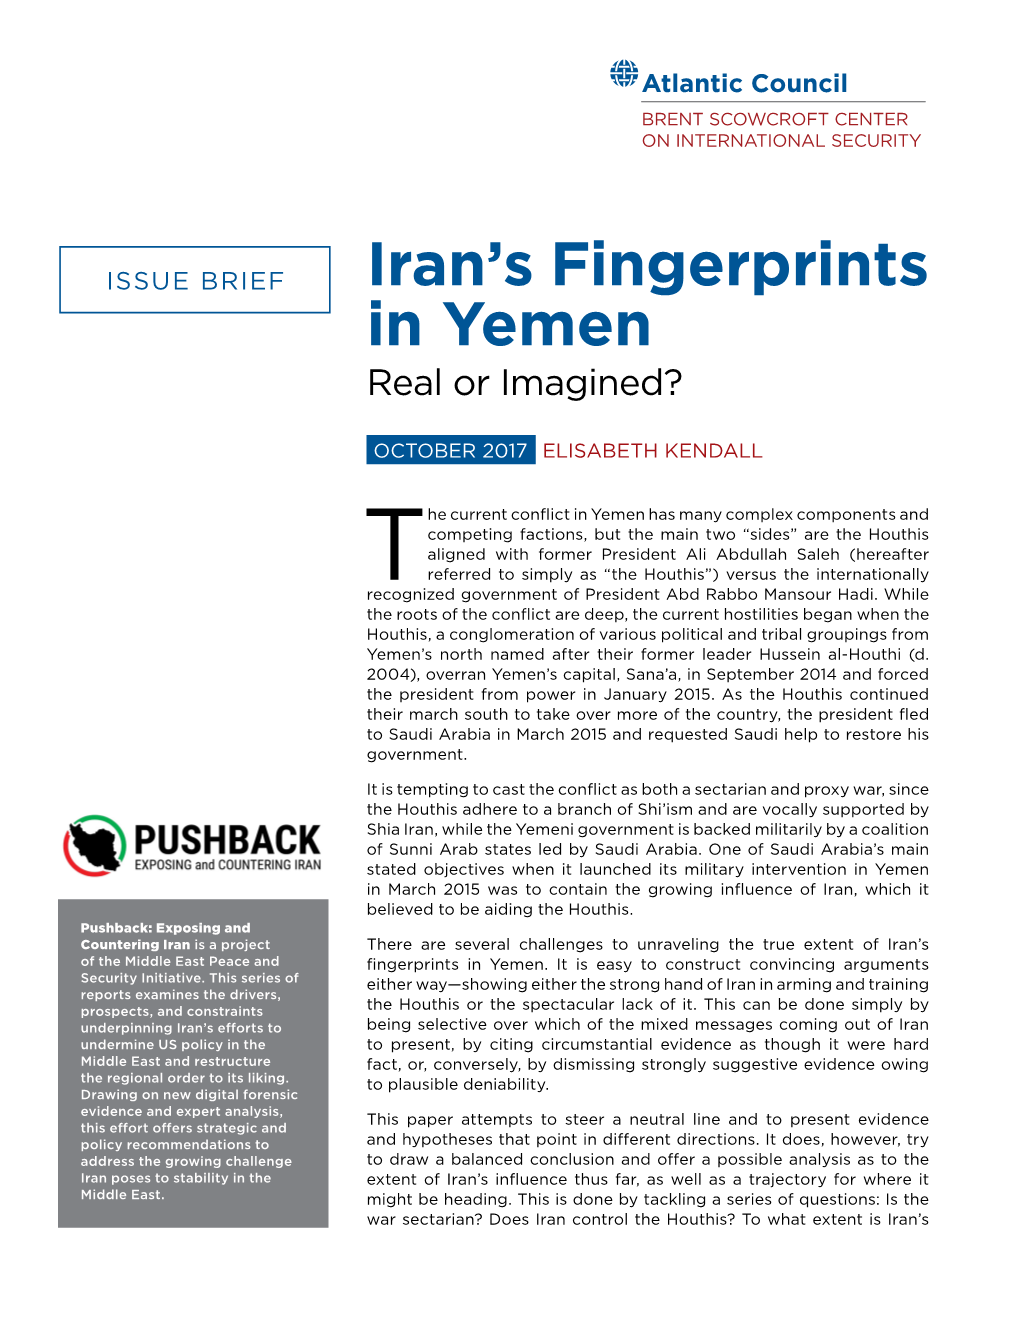 Iran's Fingerprints in Yemen: Real Or Imagined